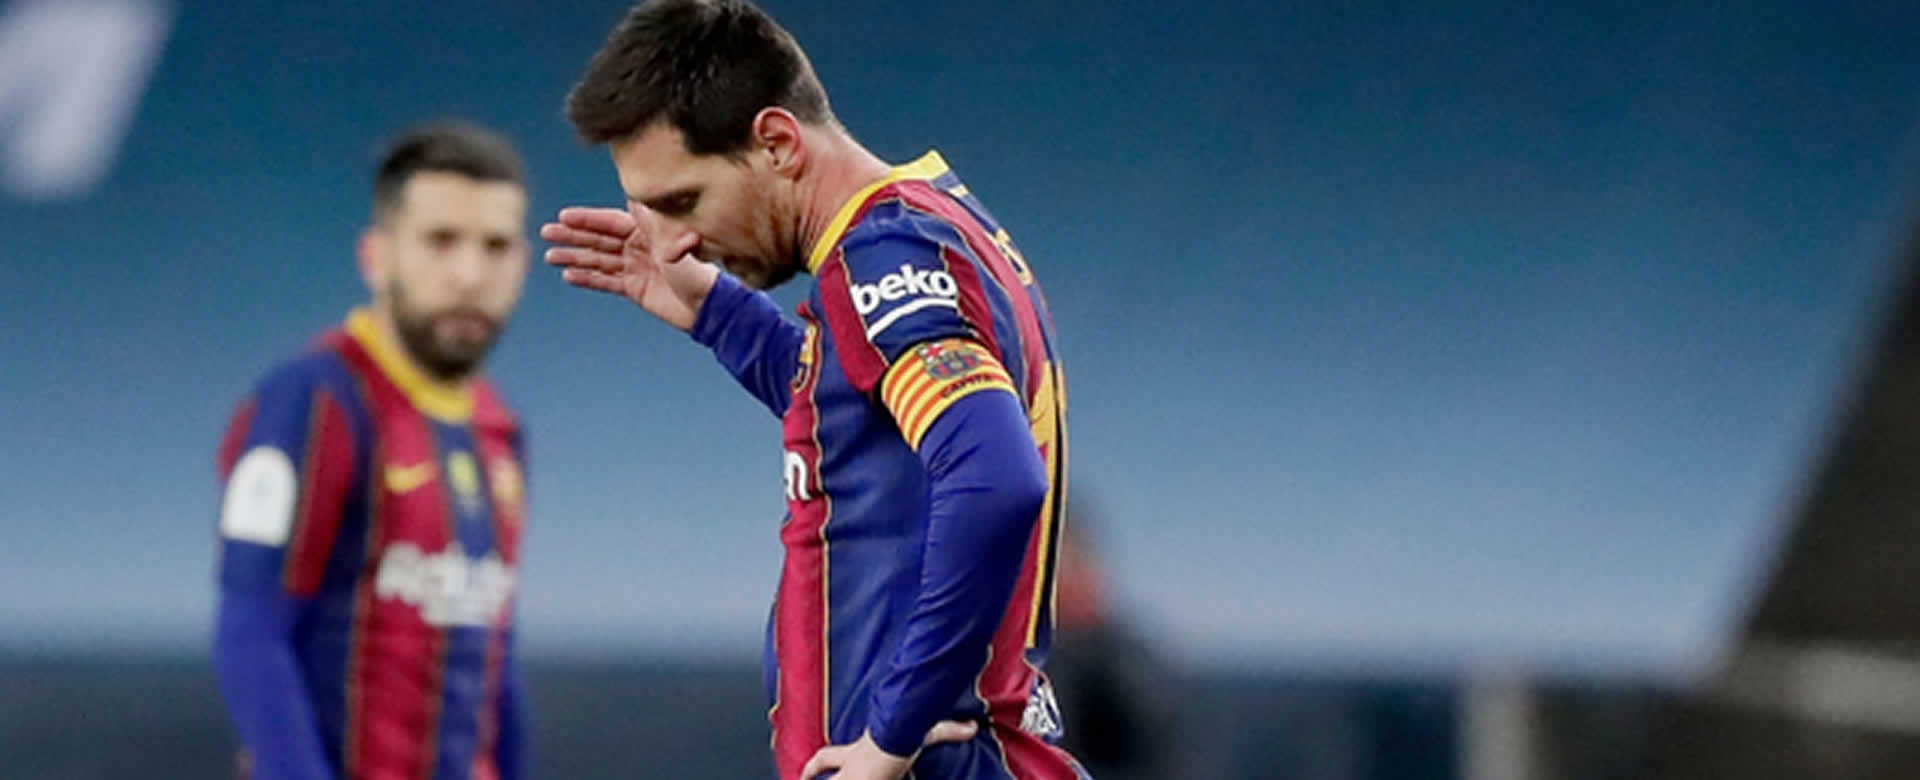 Suspenden a Messi por agredir a Villalibre durante la Supercopa